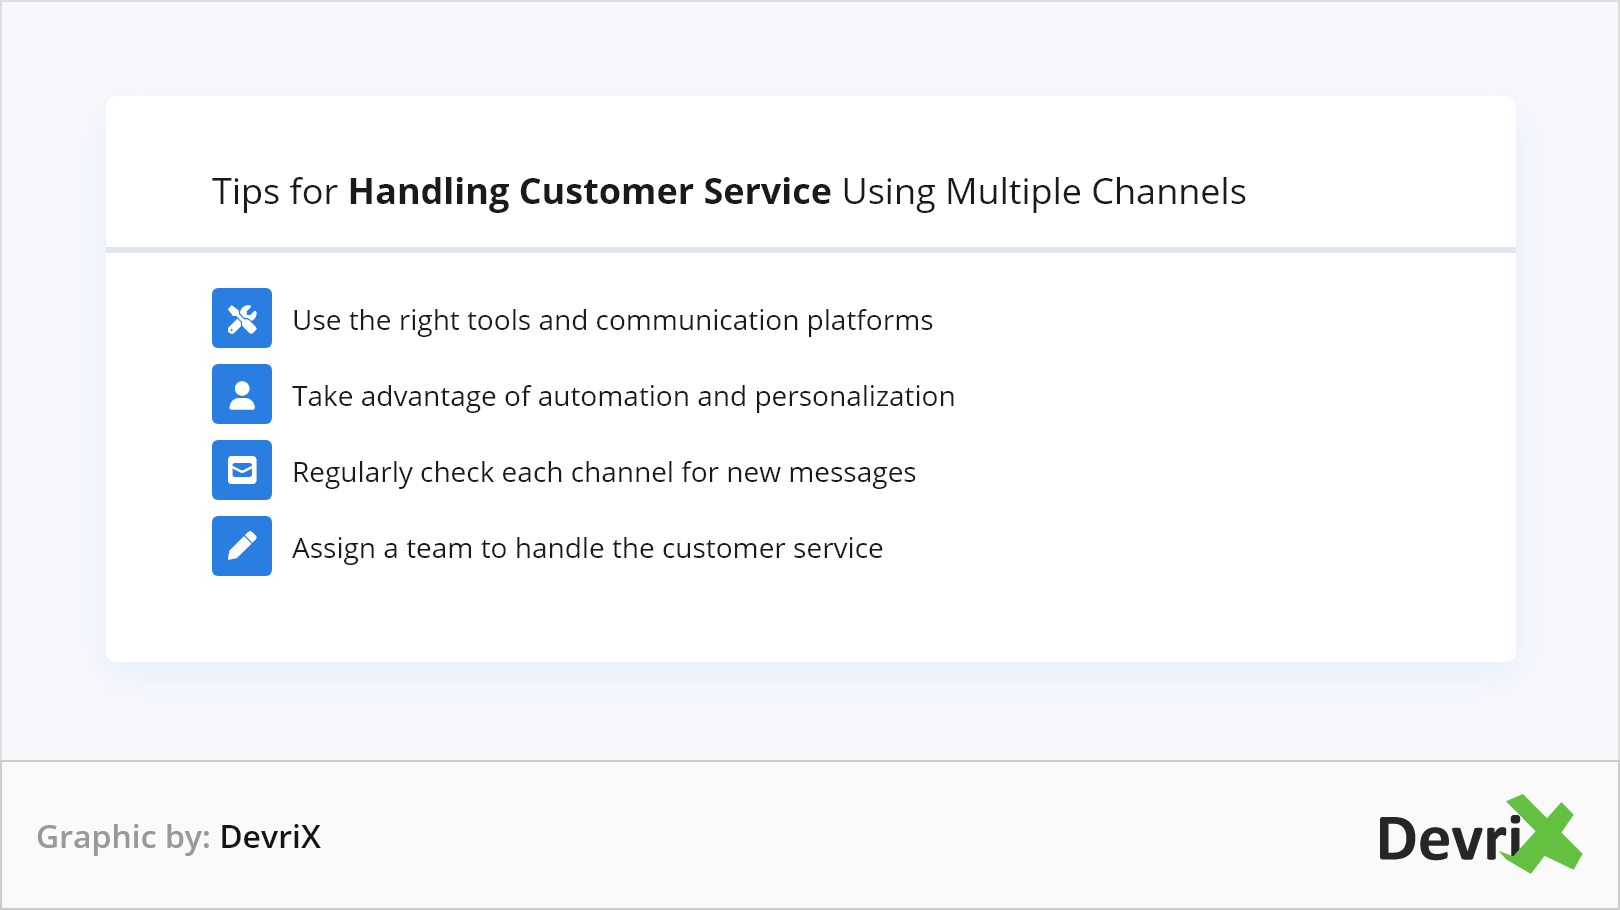 Tips for Handling Customer Service Using Multiple Channels